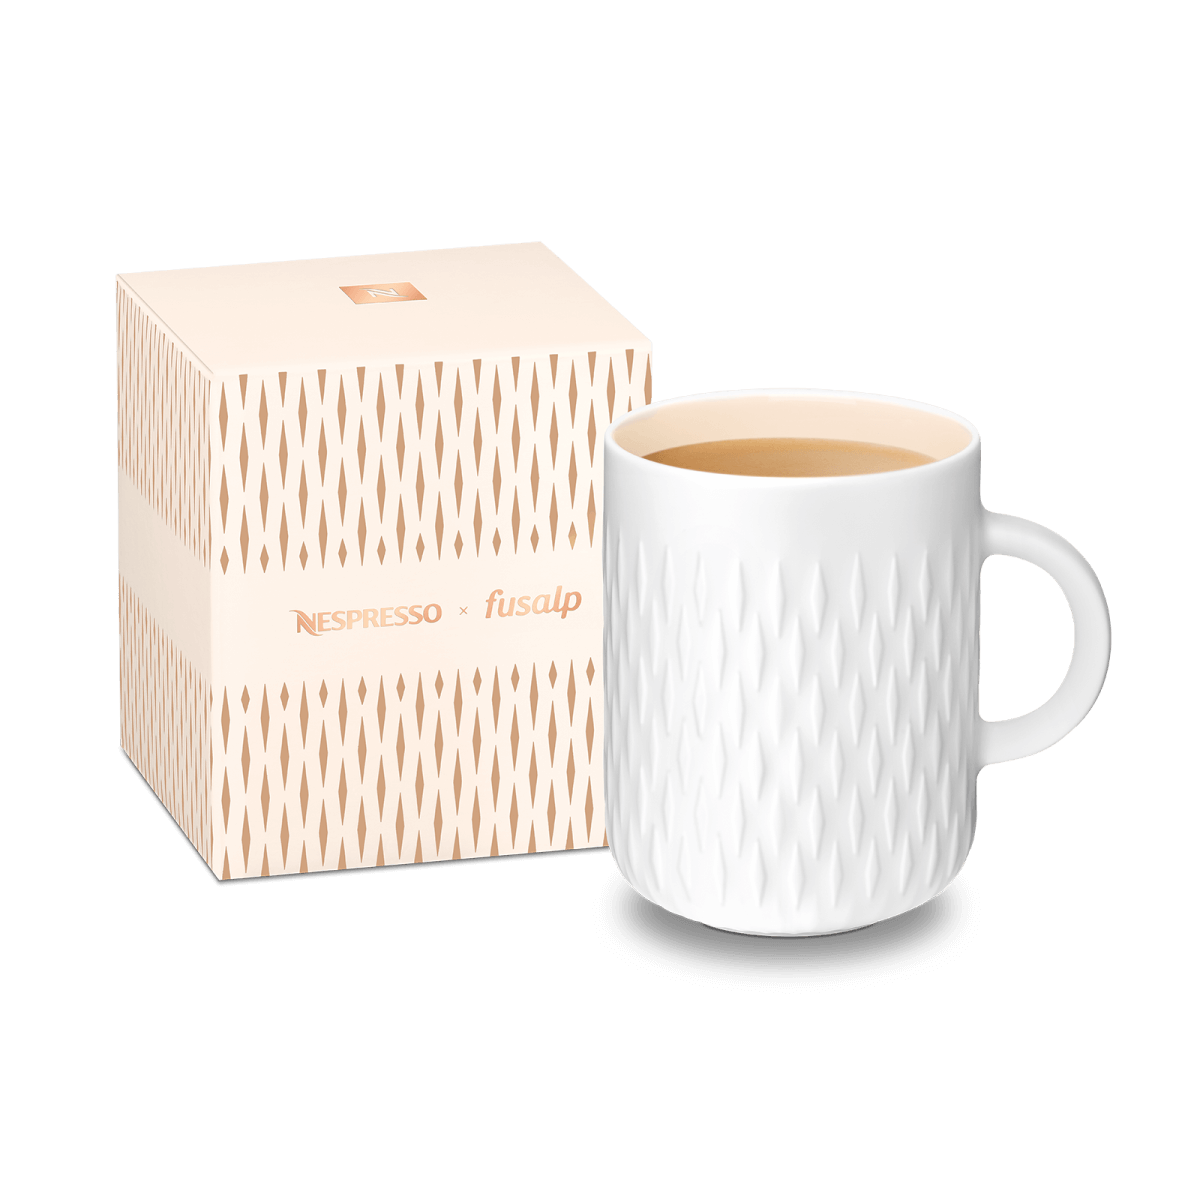 Nespresso White Coffee Mugs